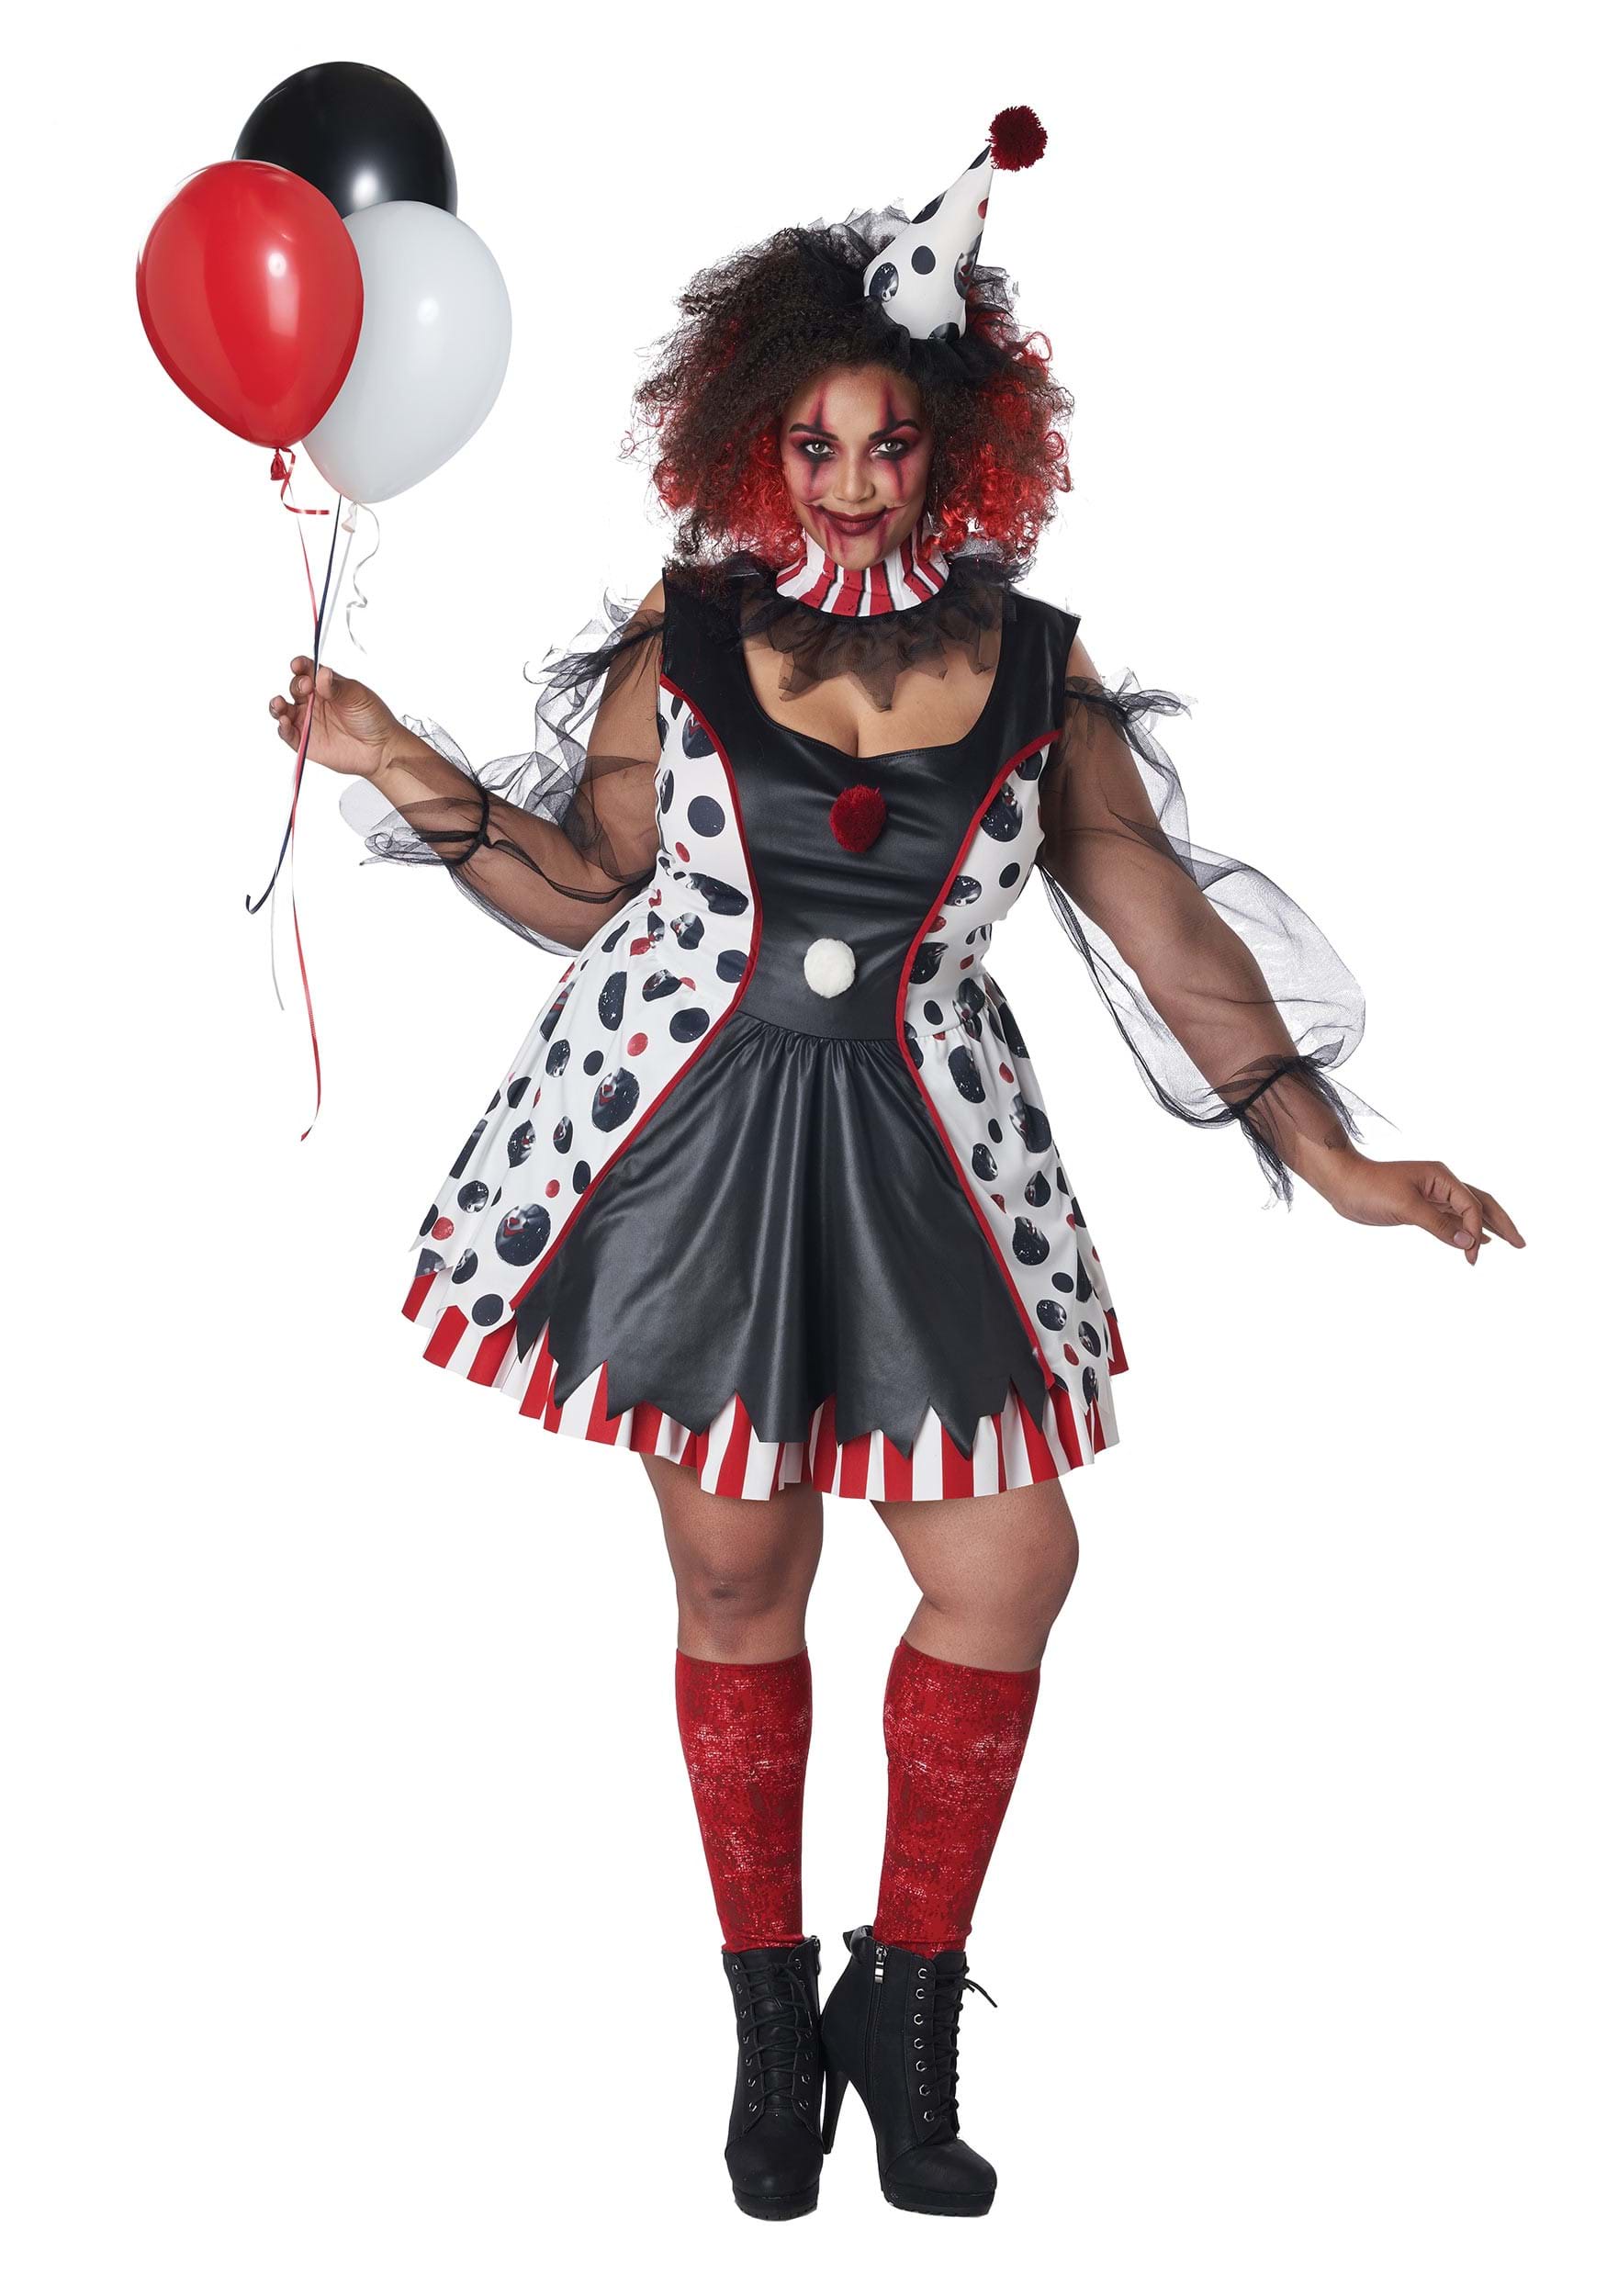 Creepy female clown from IT, costume dress, long sleeves, pom pom